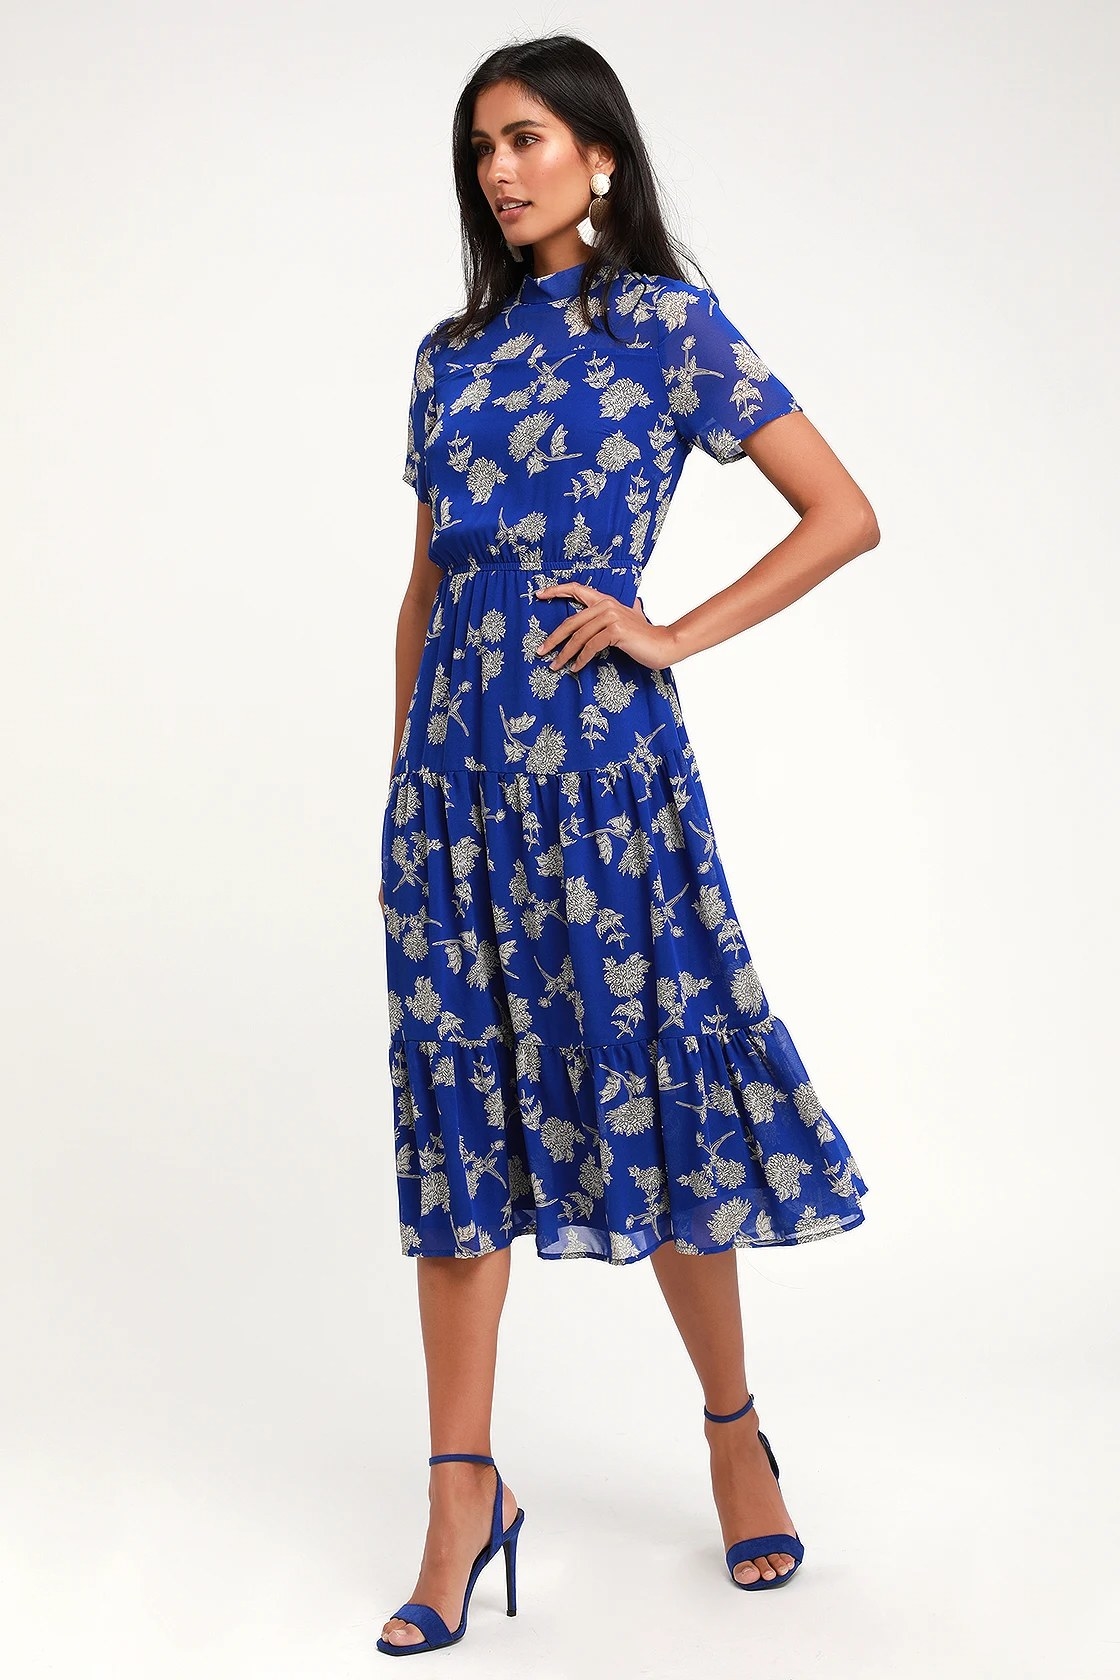 Model wearing blue floral dress